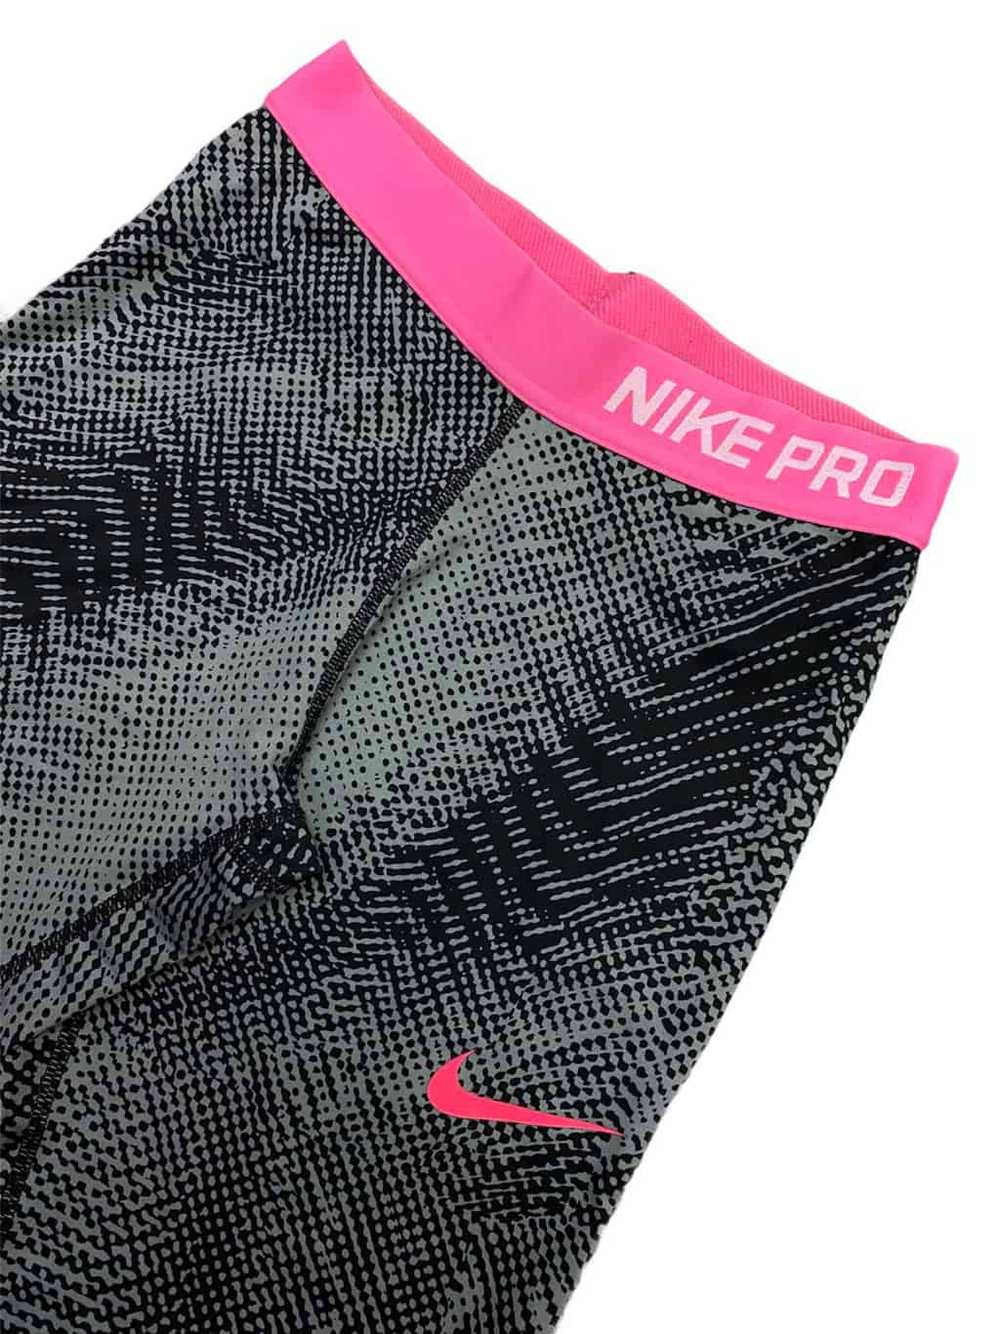 Women’s Nike Pro 3/4 Length Leggings with Pink Wa… - image 2